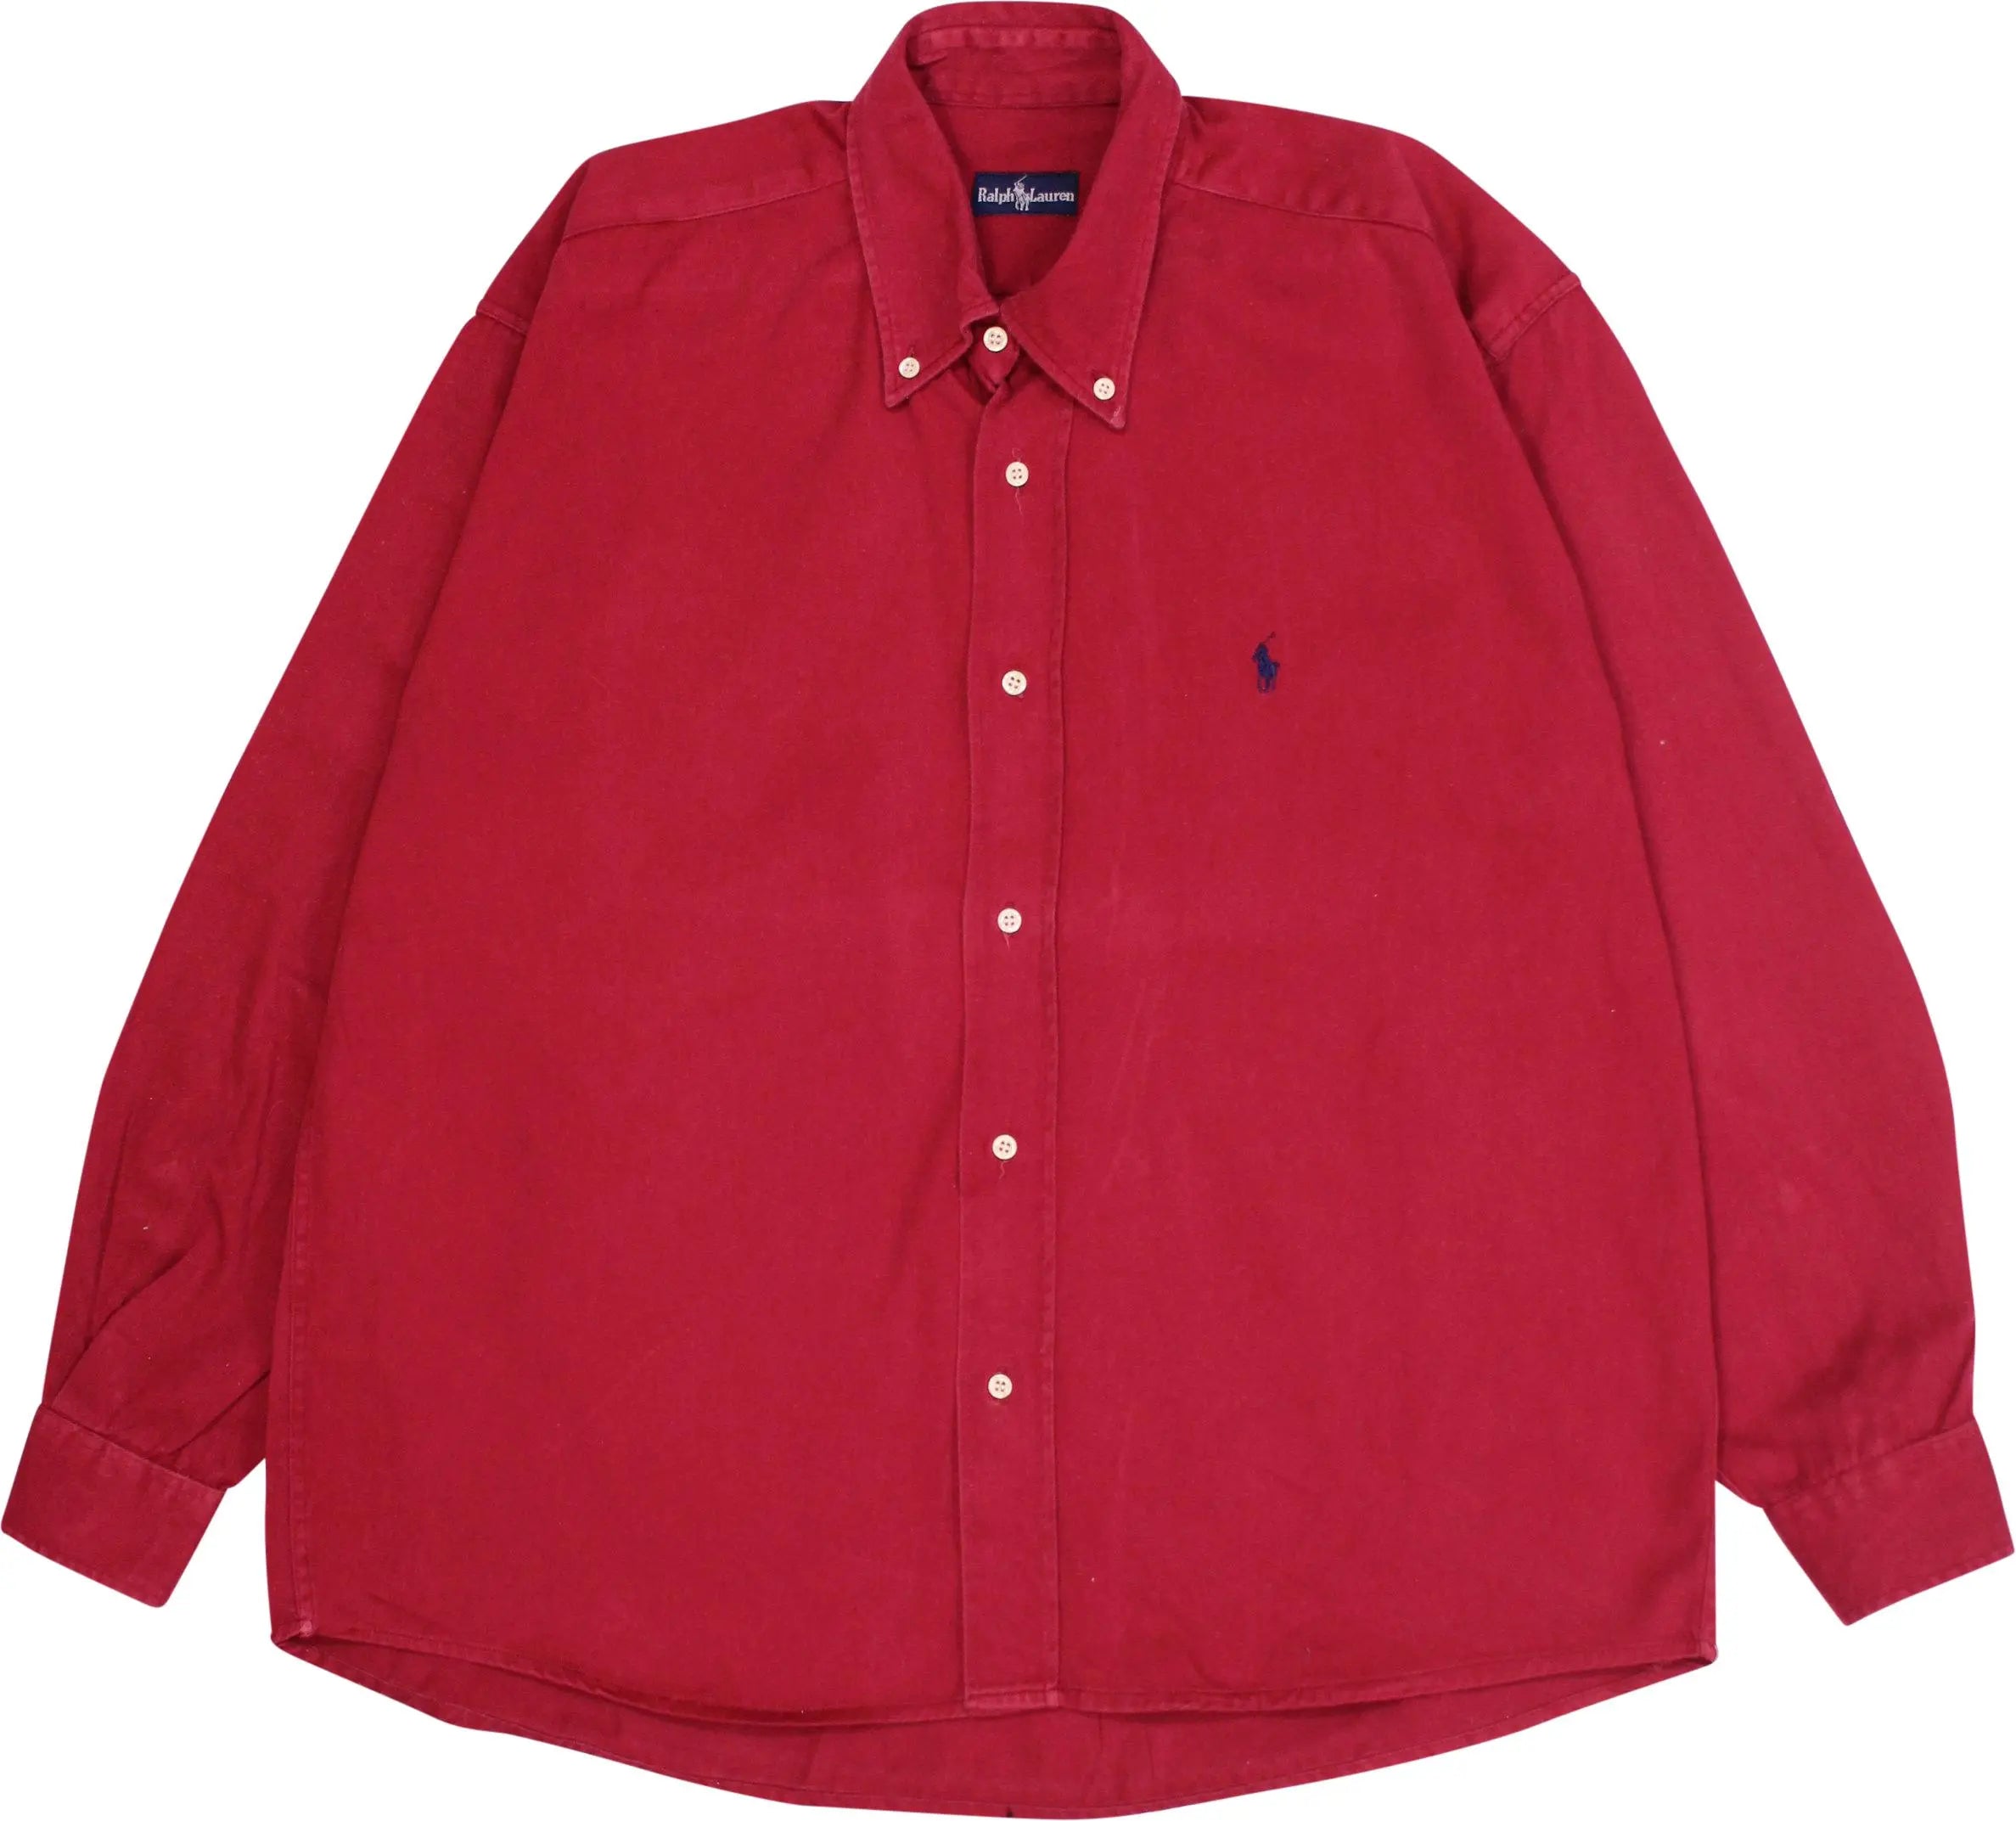 Ralph Lauren - Vintage Denim Shirt- ThriftTale.com - Vintage and second handclothing